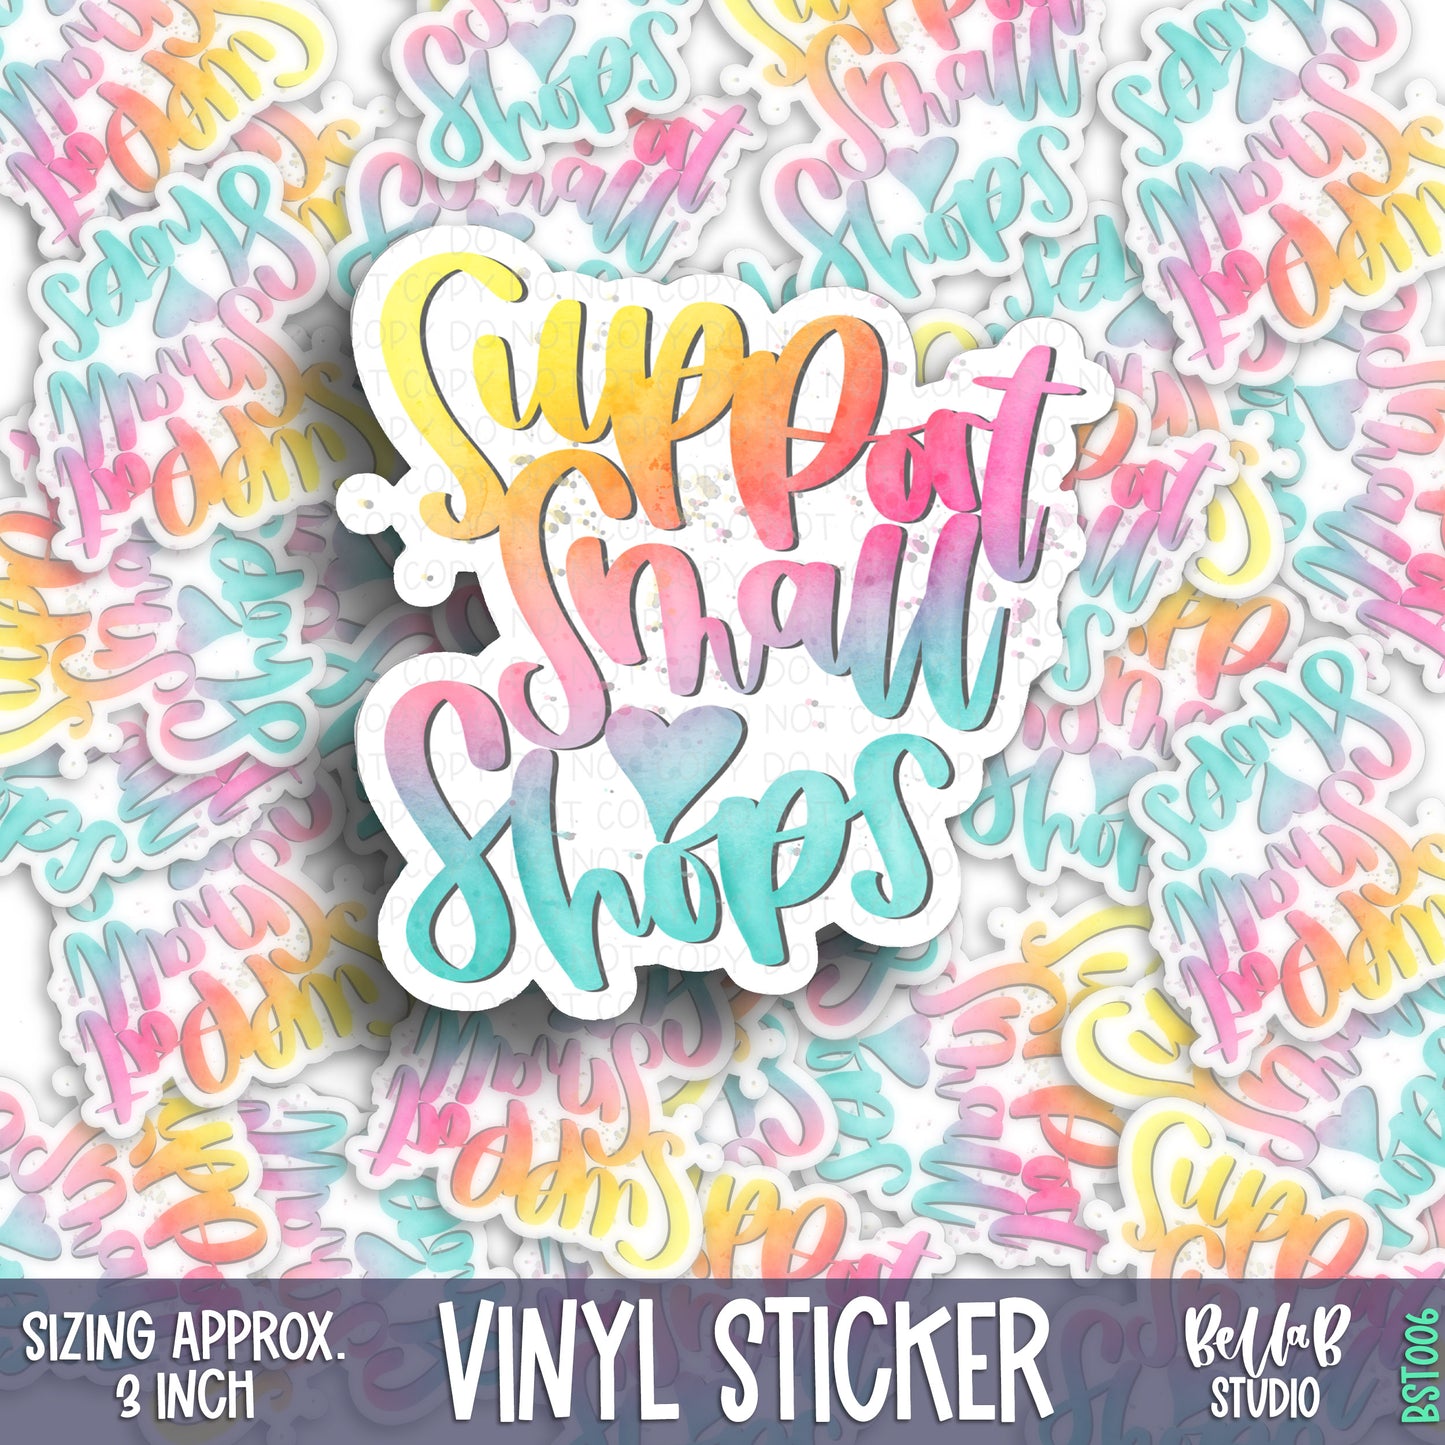 Support Small Shops Vinyl Sticker - Glossy Permanent Weatherproof